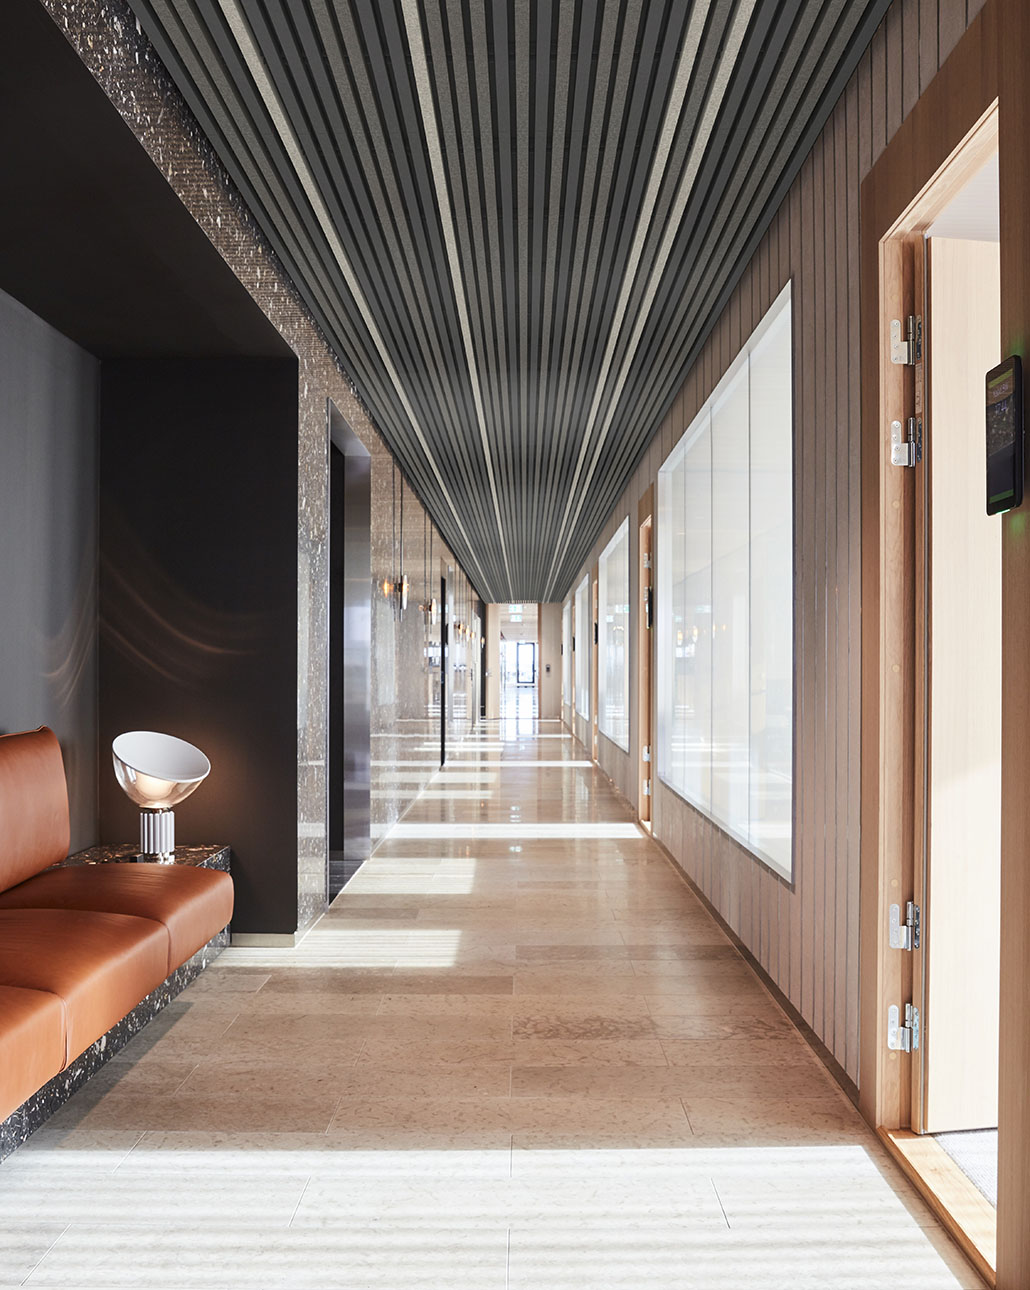 Hotel corridor with Gustafs Feltfon acoustic ceiling.